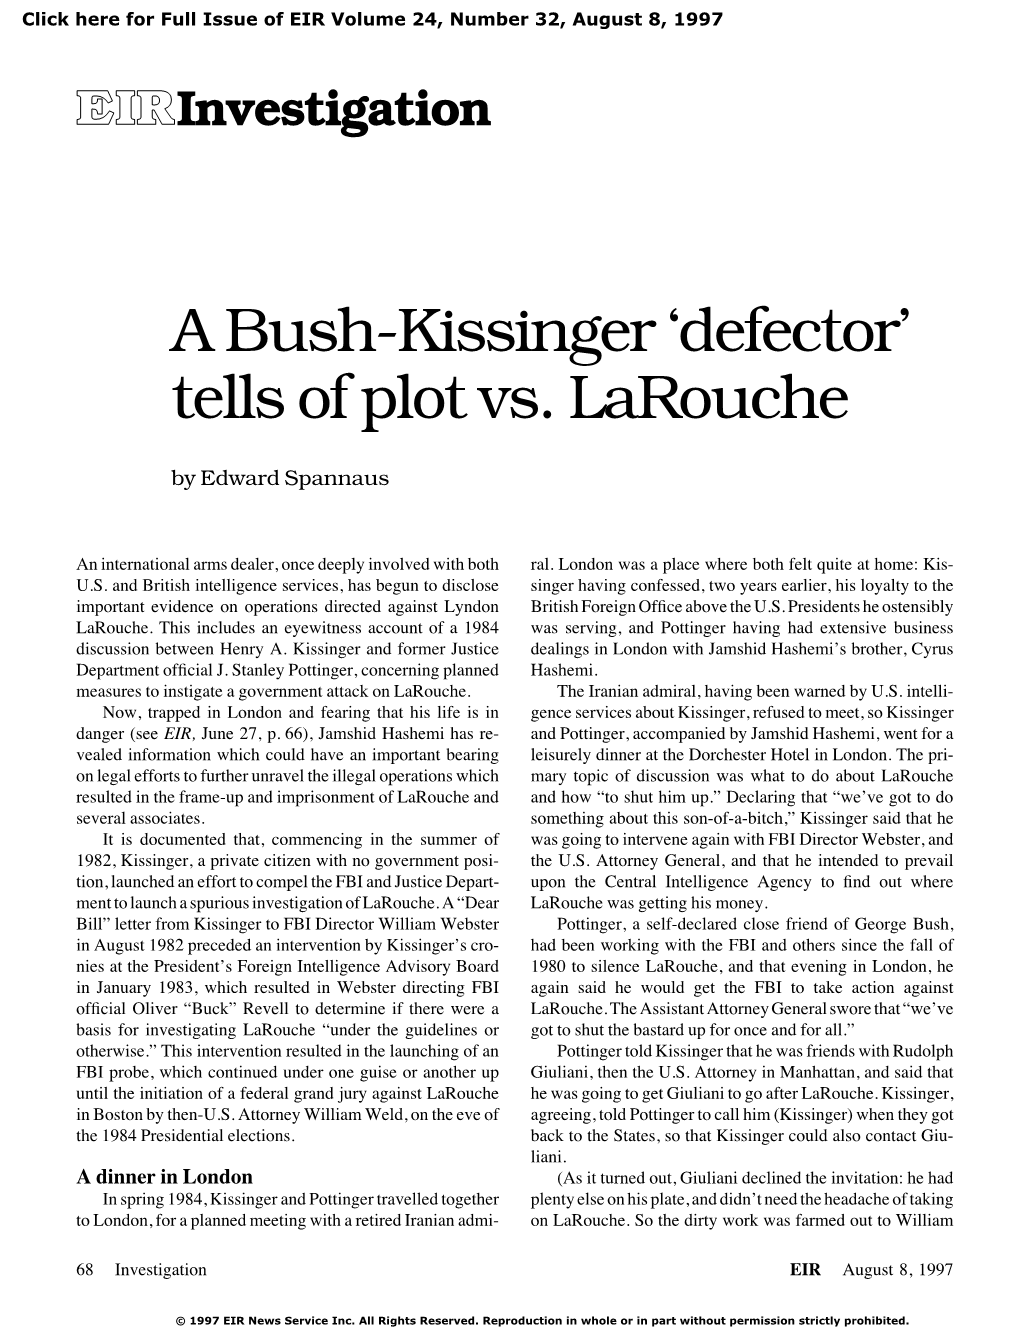 A Bush-Kissinger 'Defector' Tells of Plot Vs. Larouche